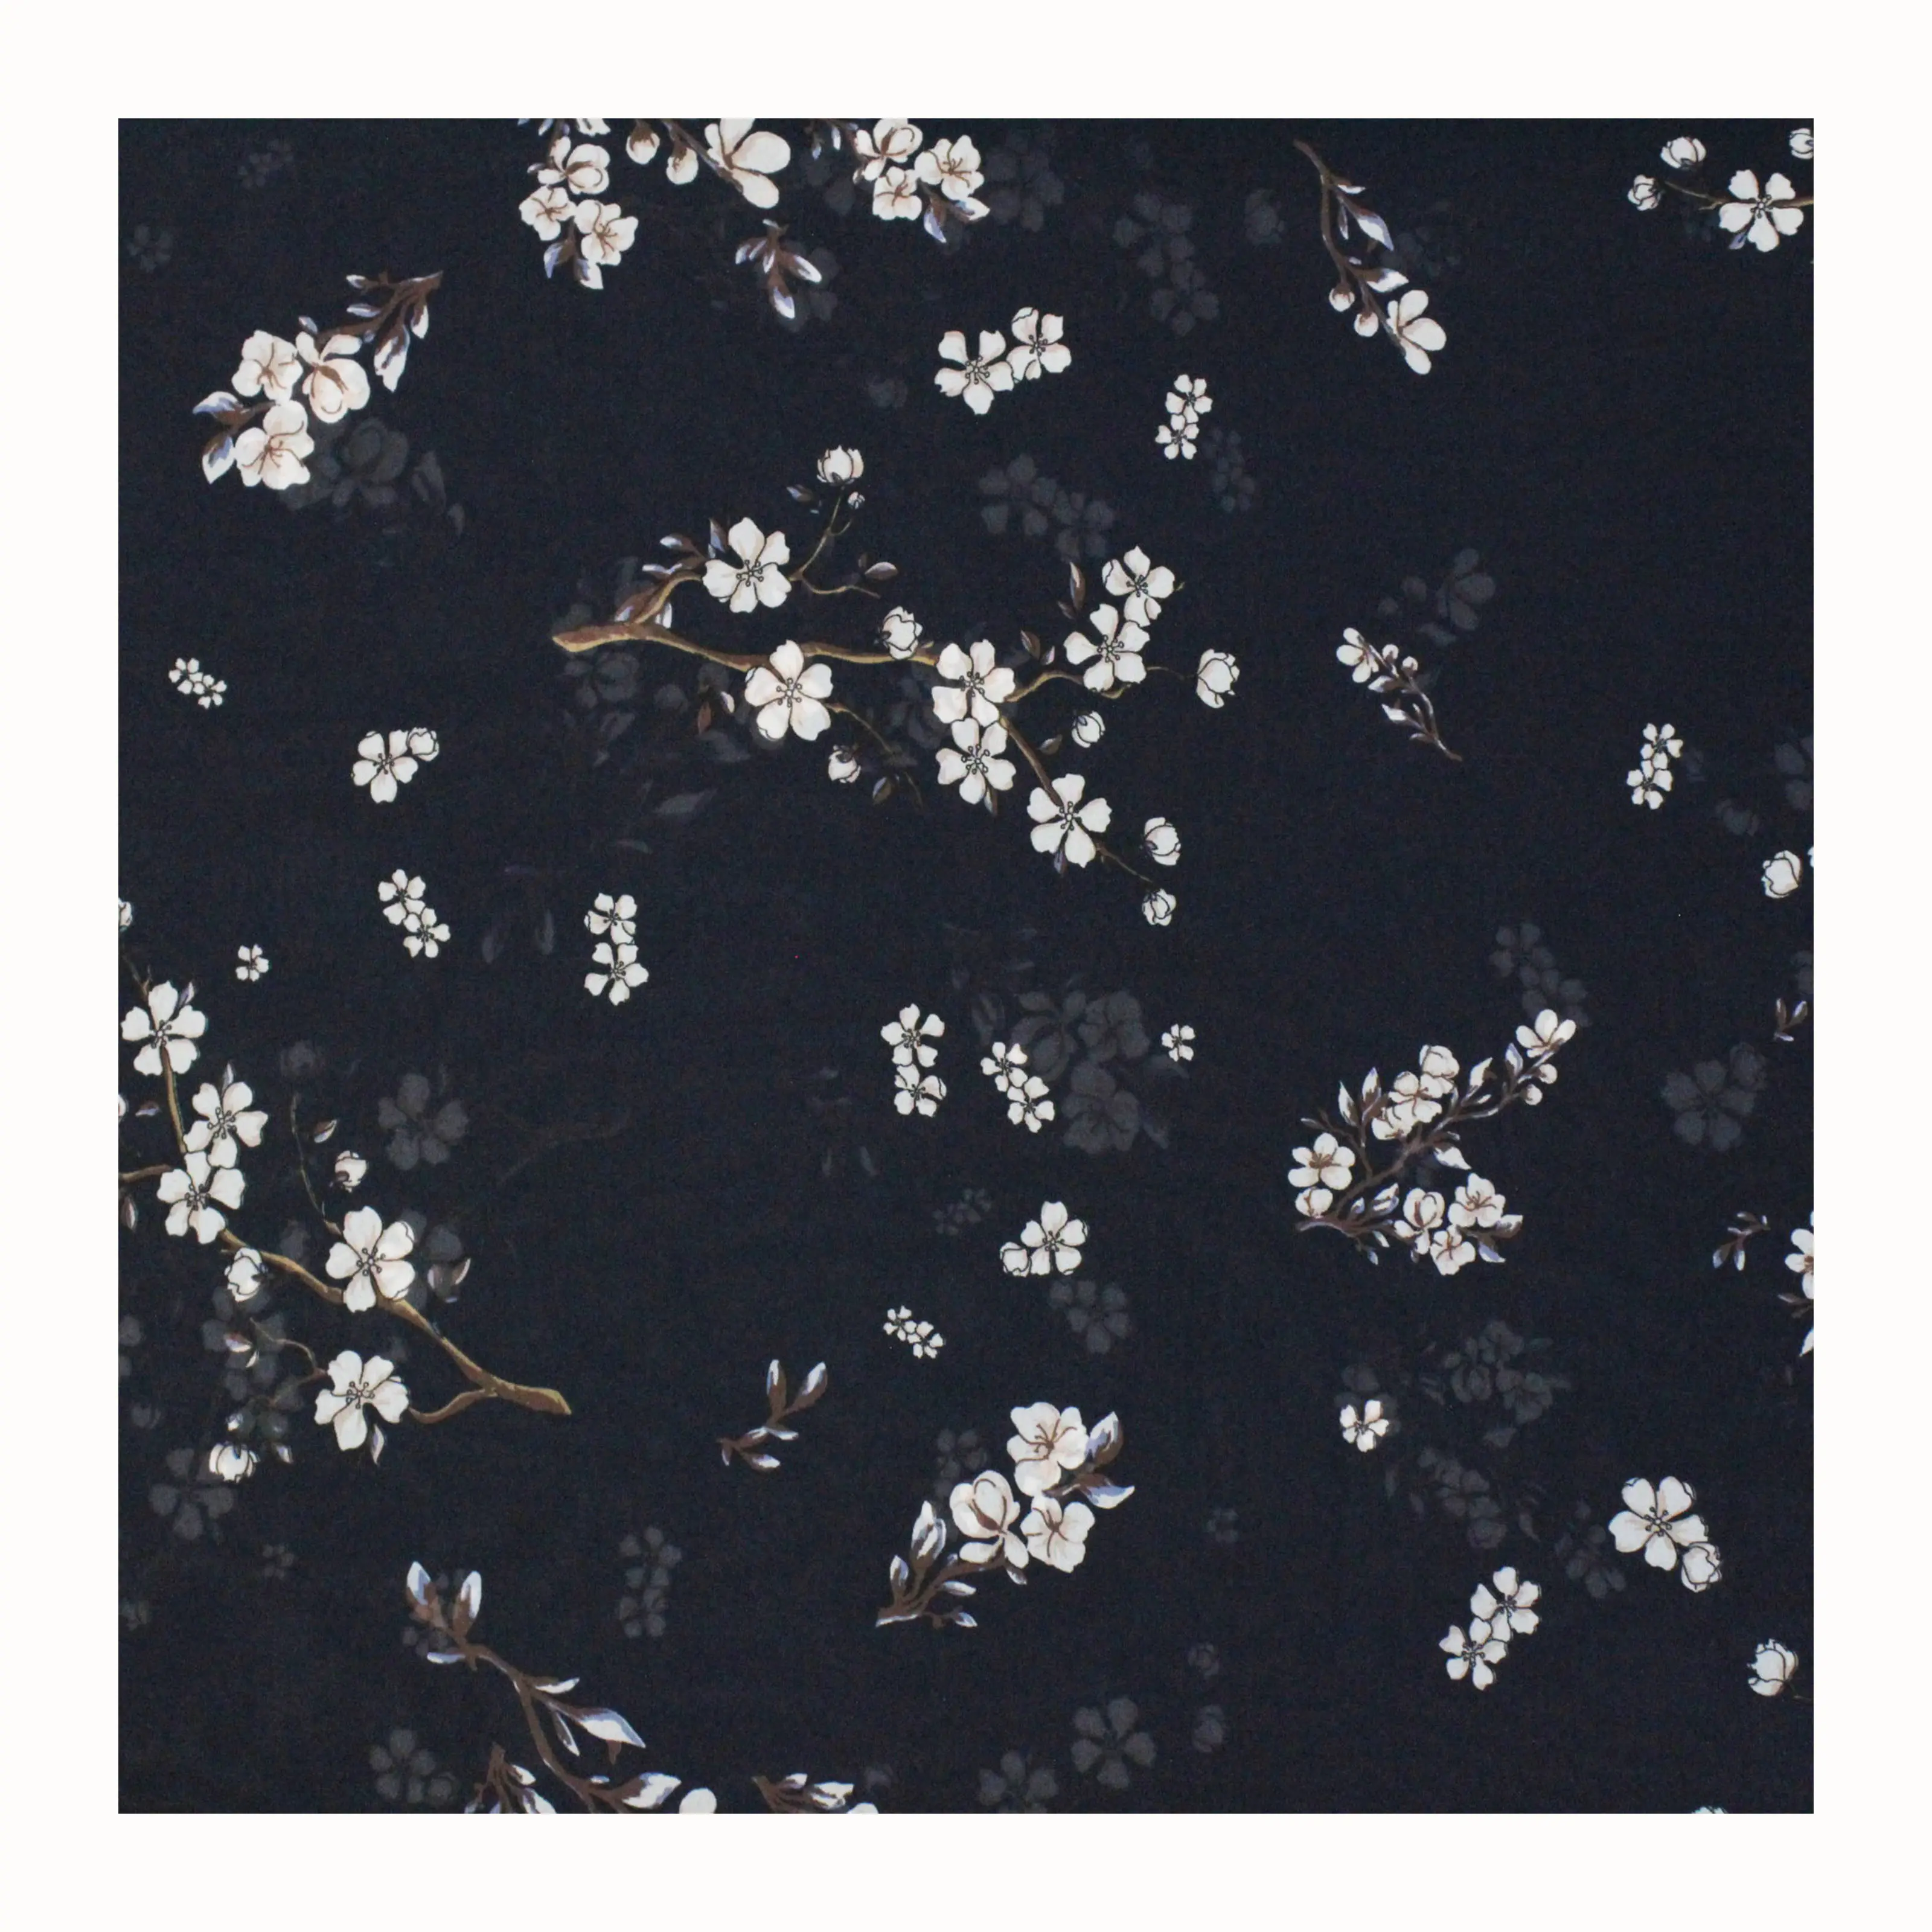 Custom printed 100% polyester chiffon fabric 75 black floral sheer fabric for women dresses shirt skirt